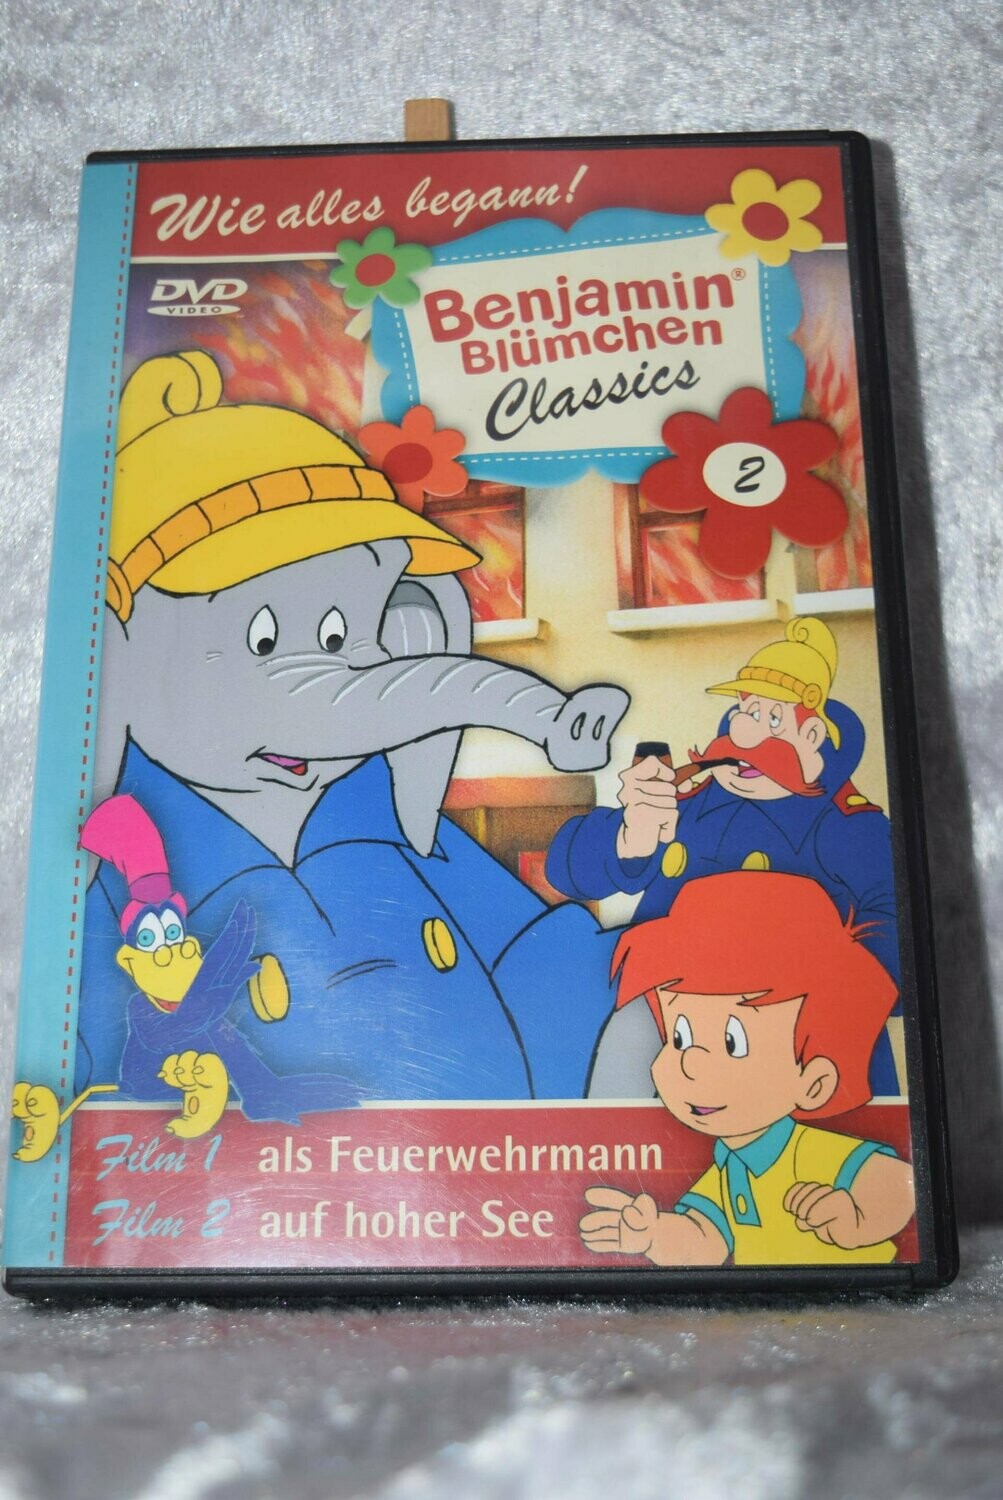 DVD "Benjamin Blümchen" 2 Filme